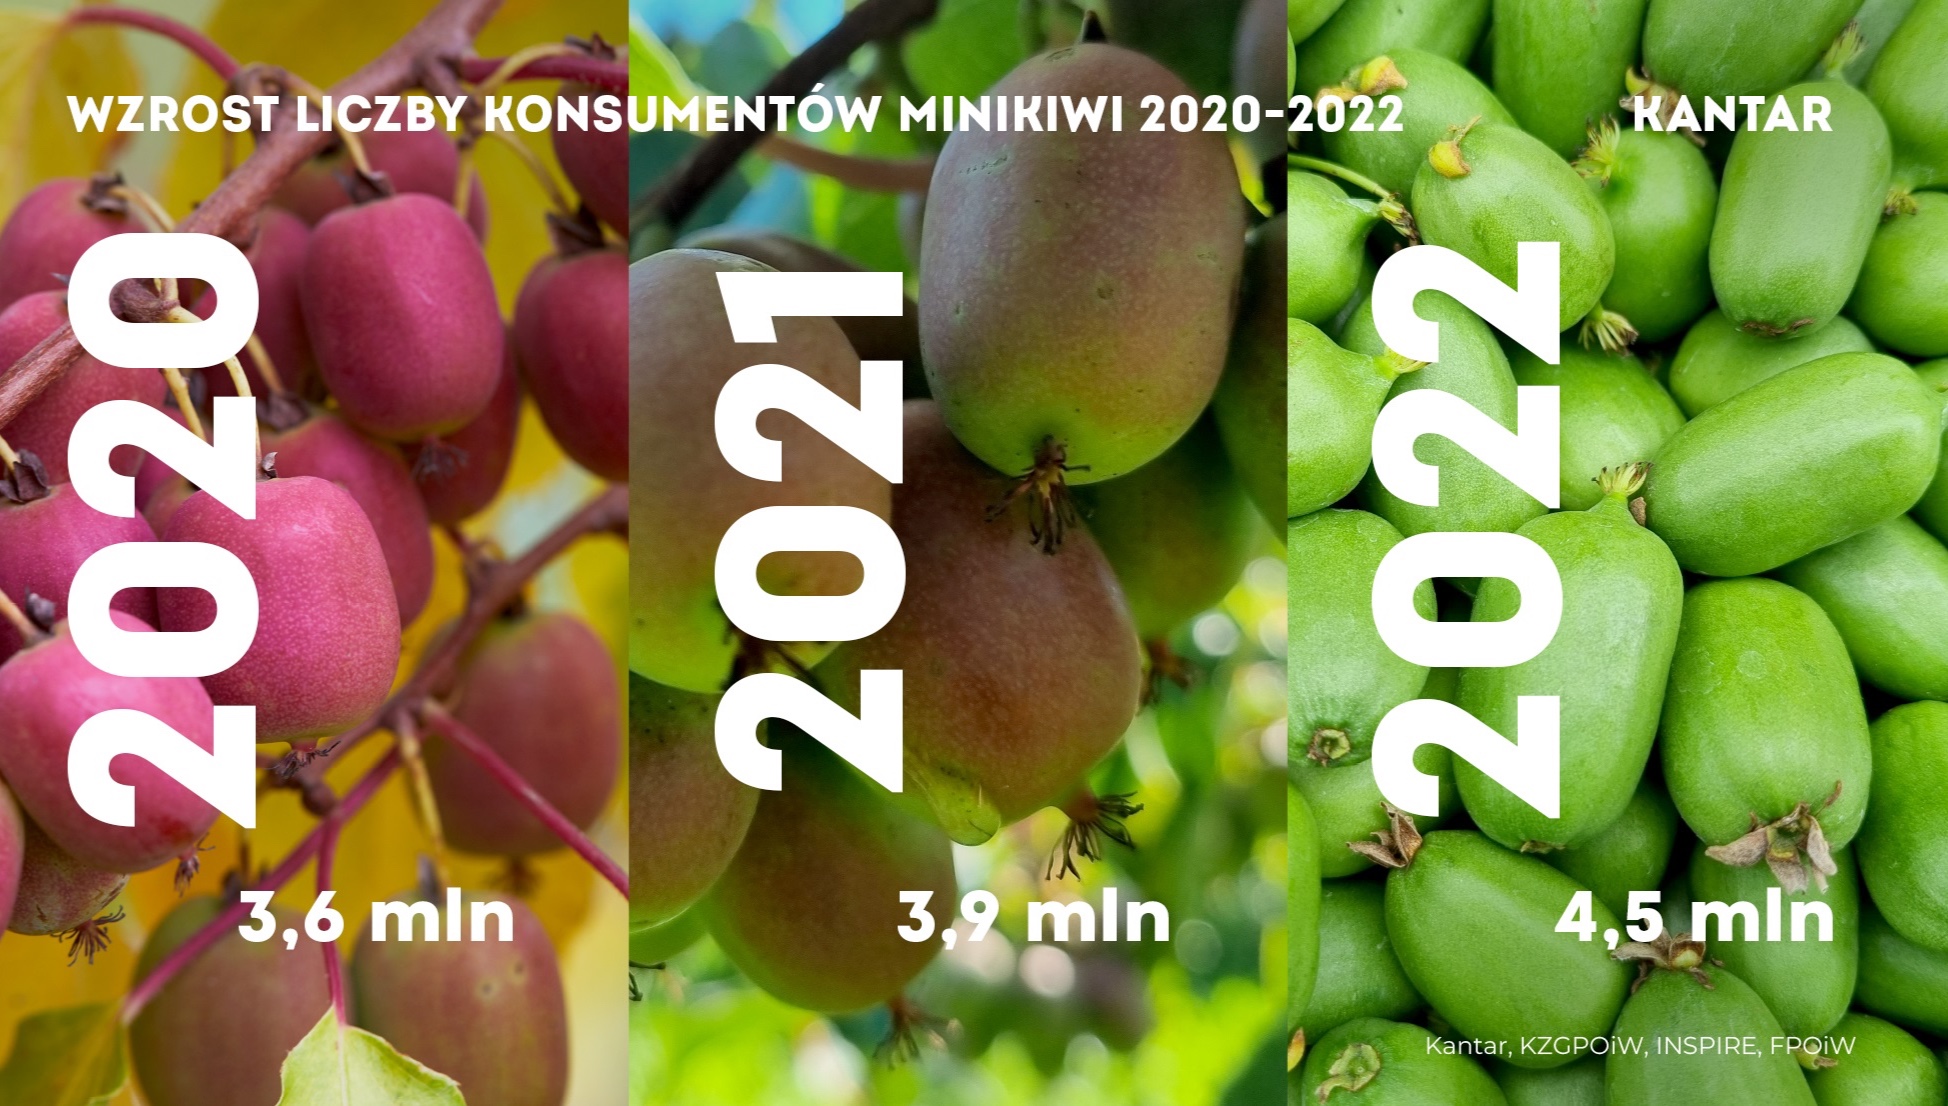 Kiwi berry: 4.5 million consumers in 2022